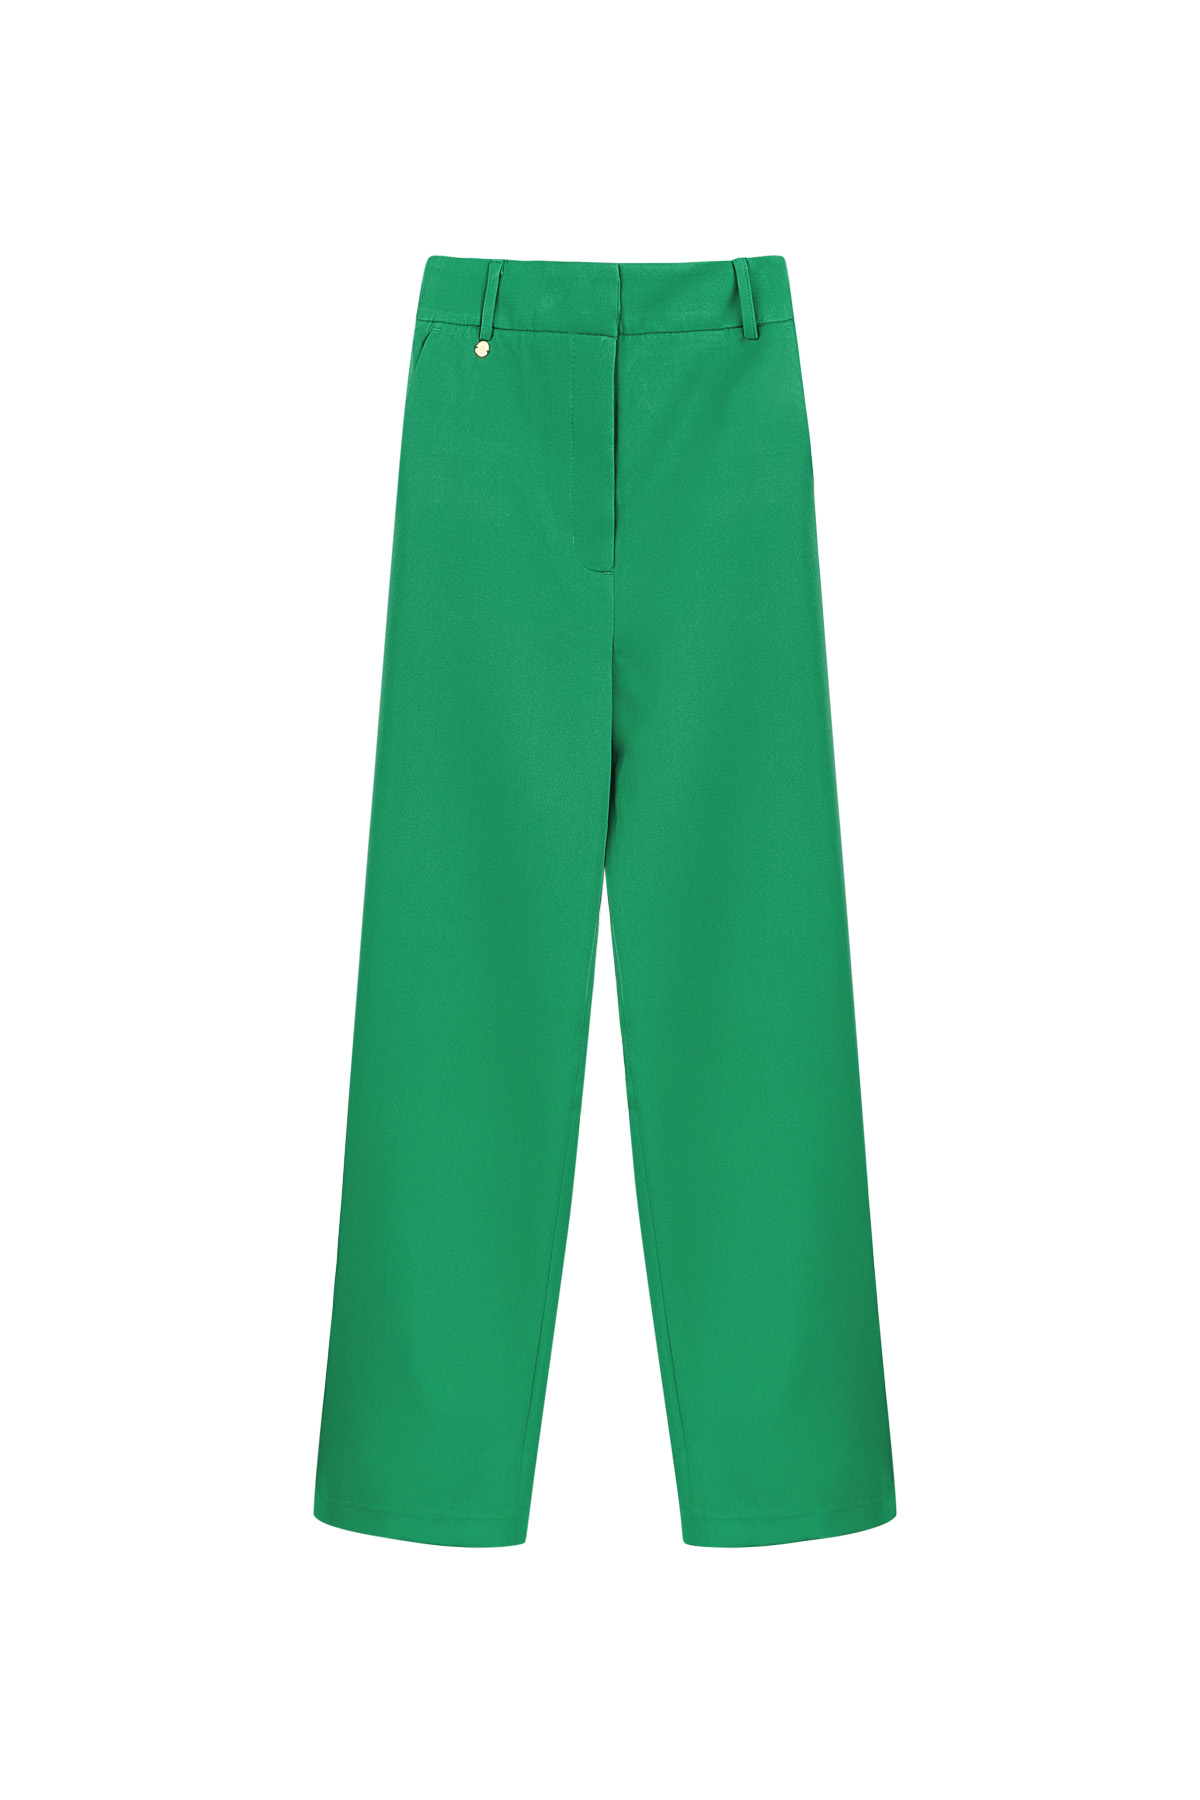 Pileli pantolon - yeşil h5 